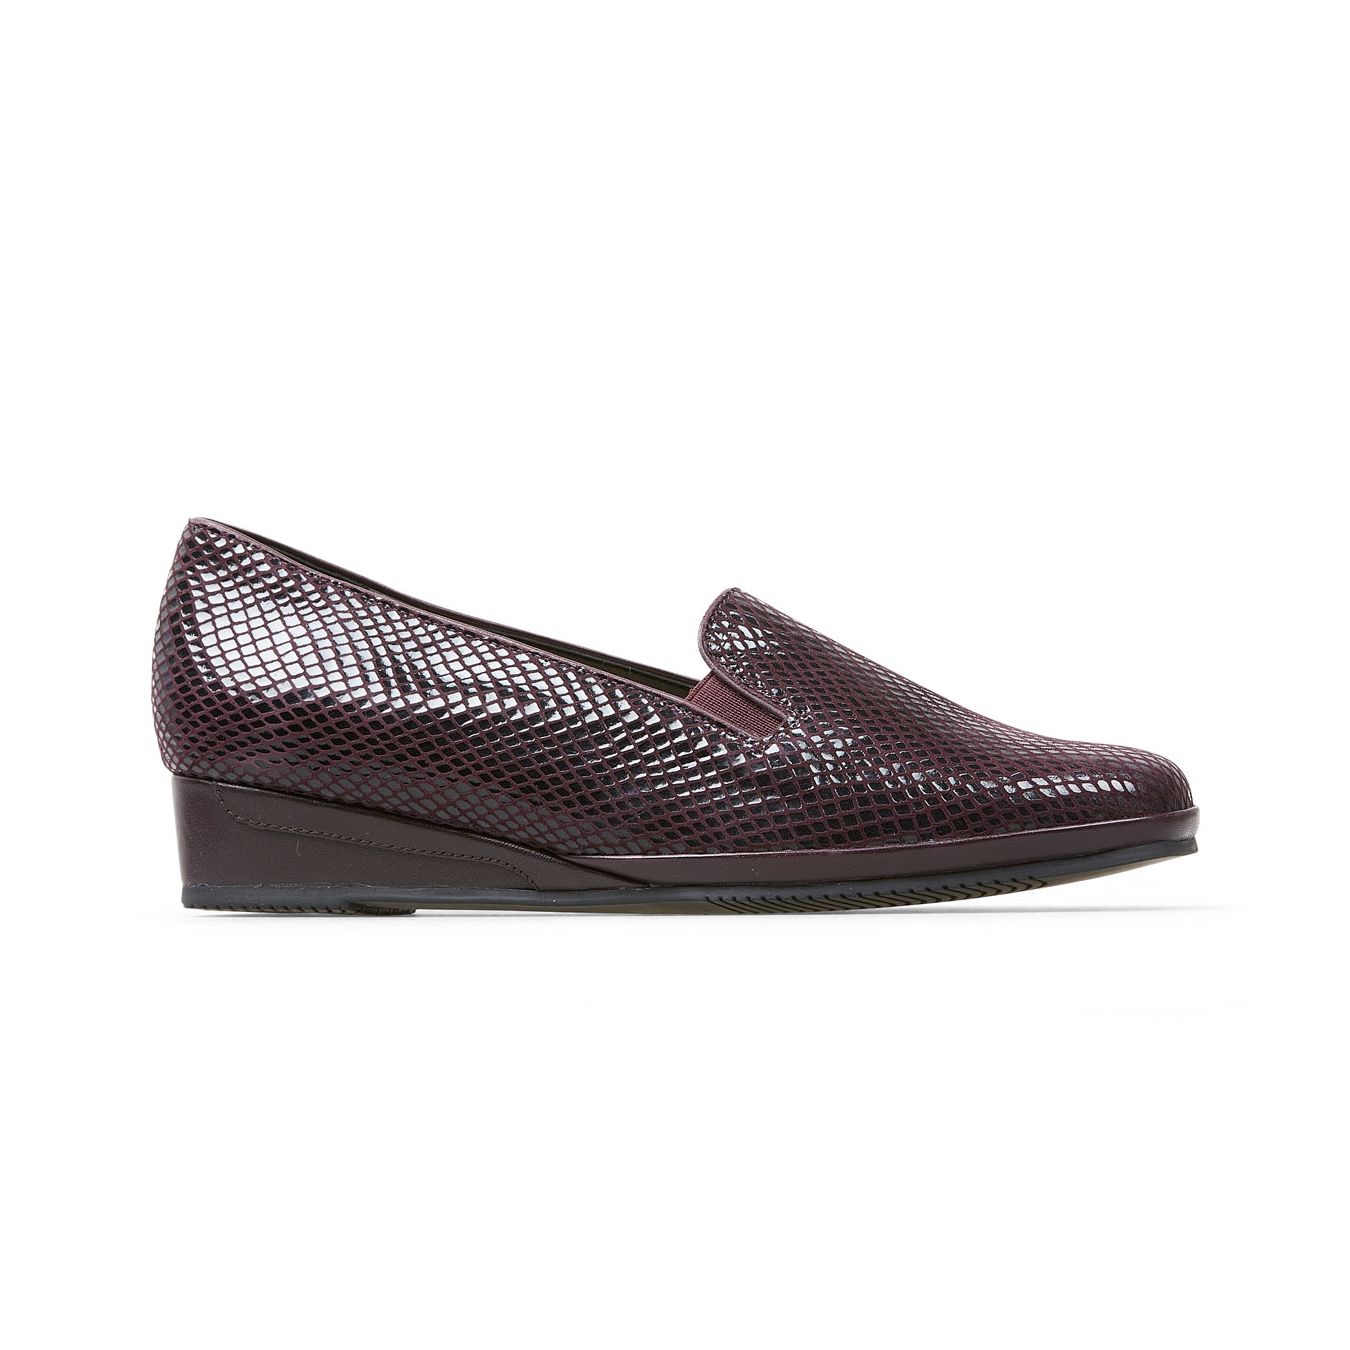 Van Dal Rochester II 5305 Bordo Feature Wedge Shoes